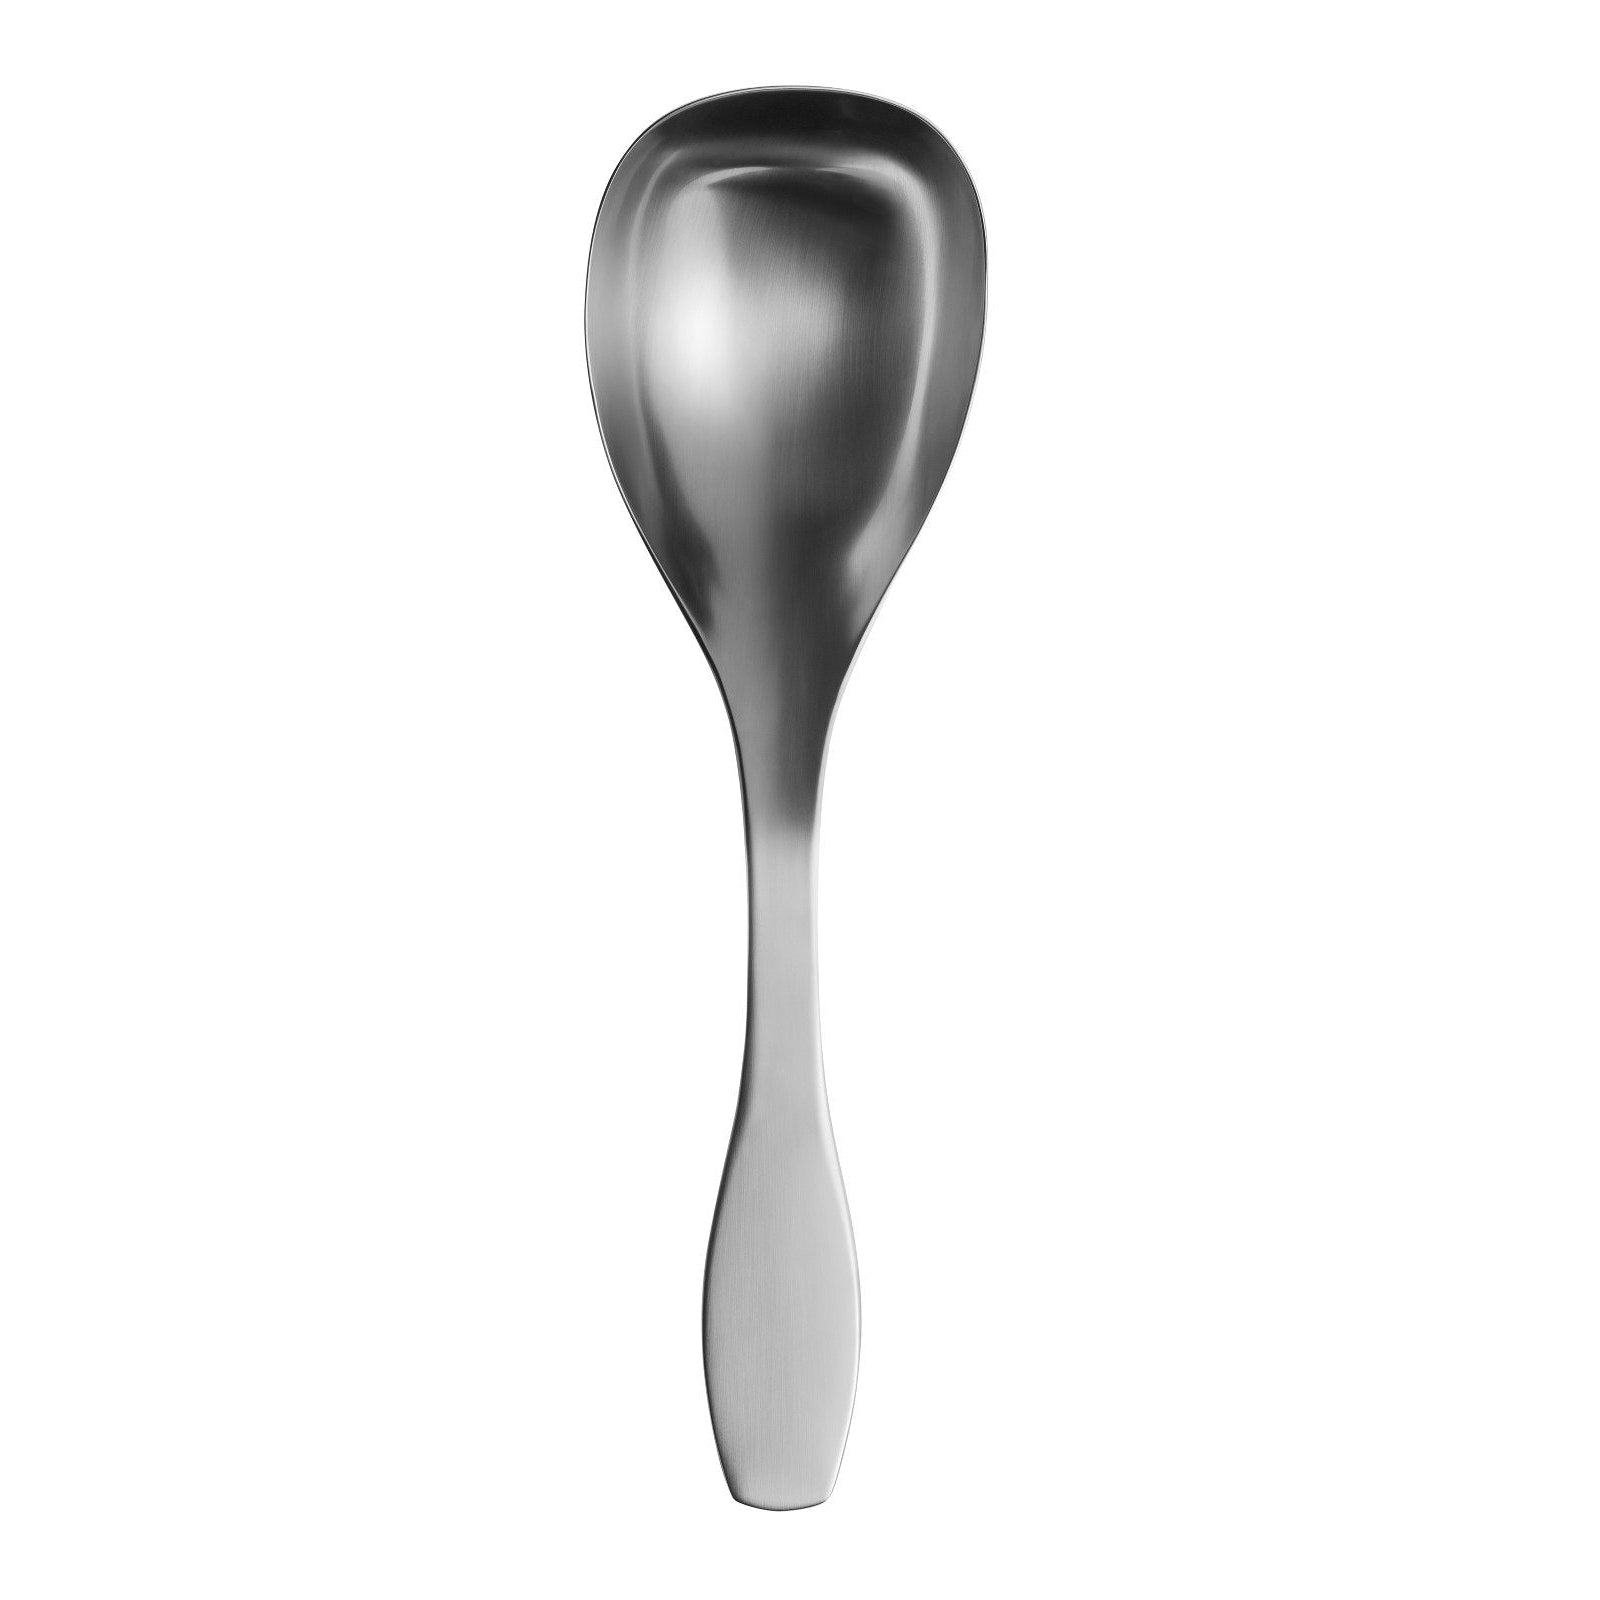 Iittala Collective Tools Serve Spoon, Large